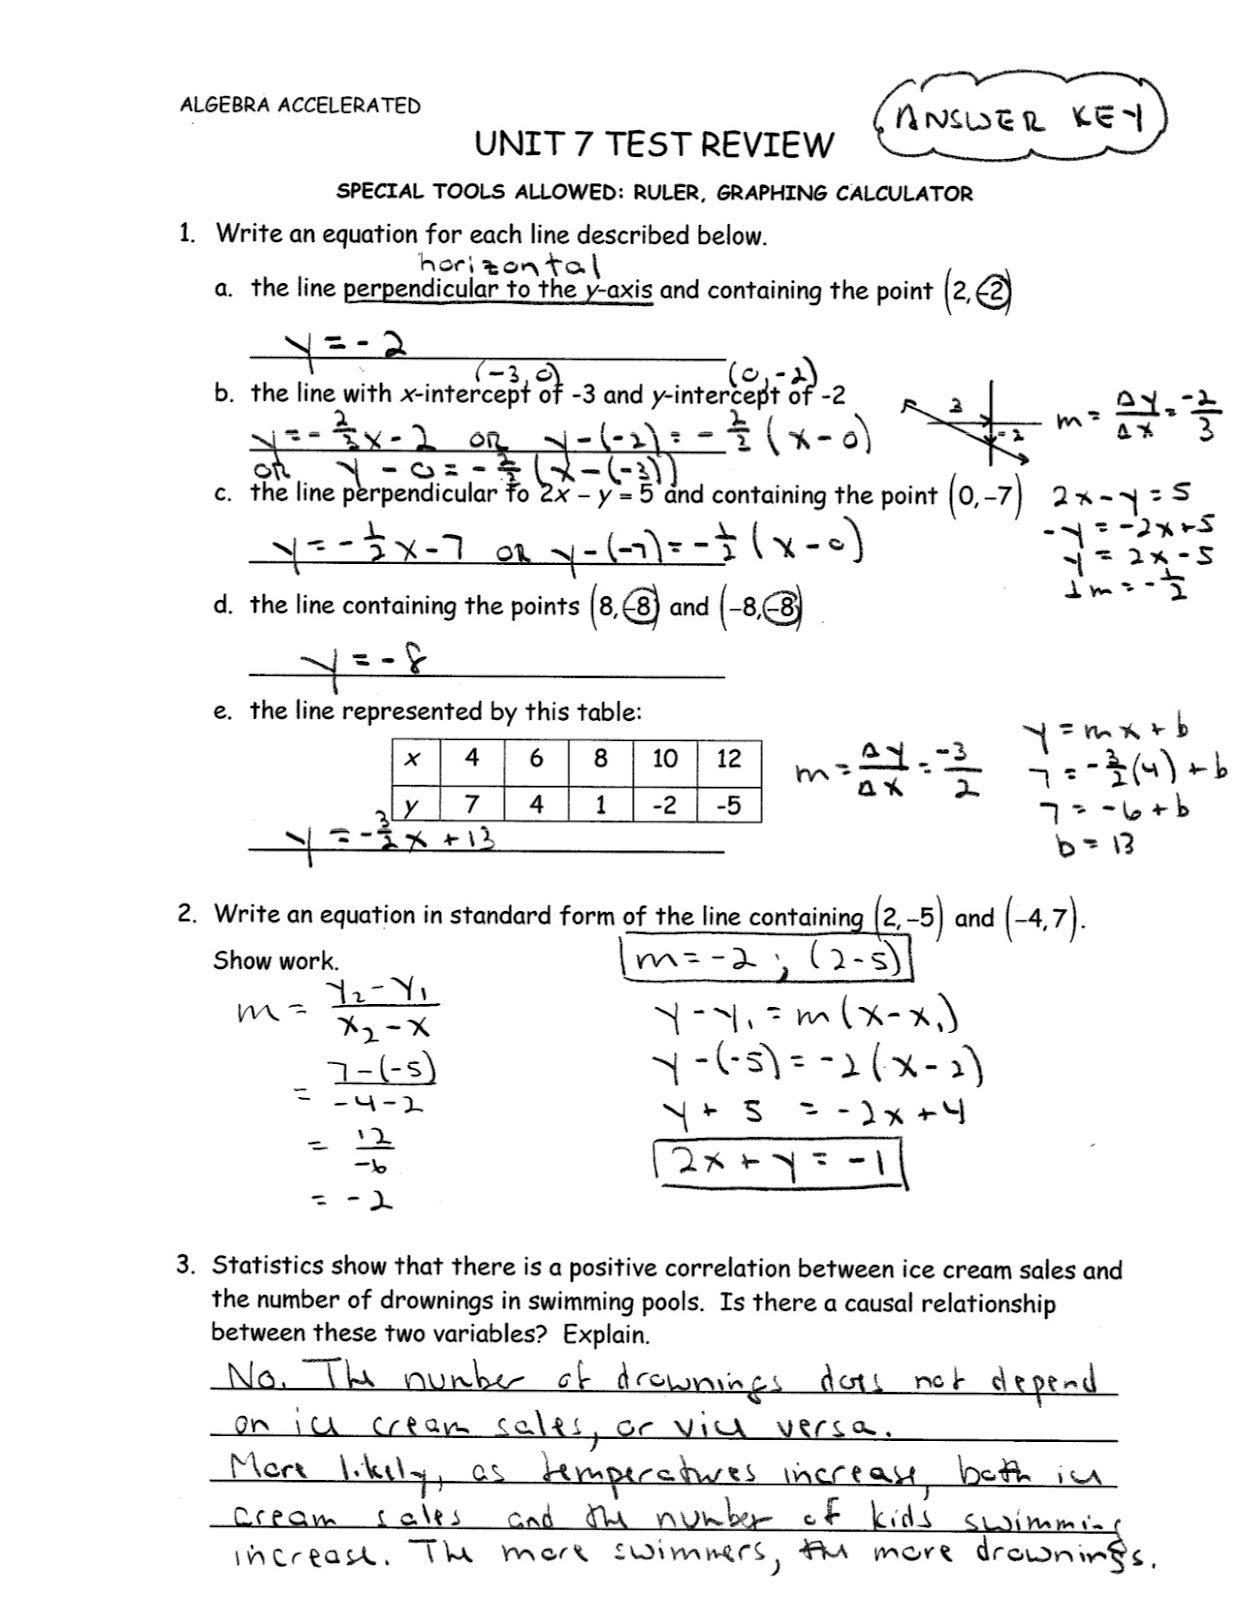 Iroquois Algebra Blog: Unit 7 Review Packet Answer Key